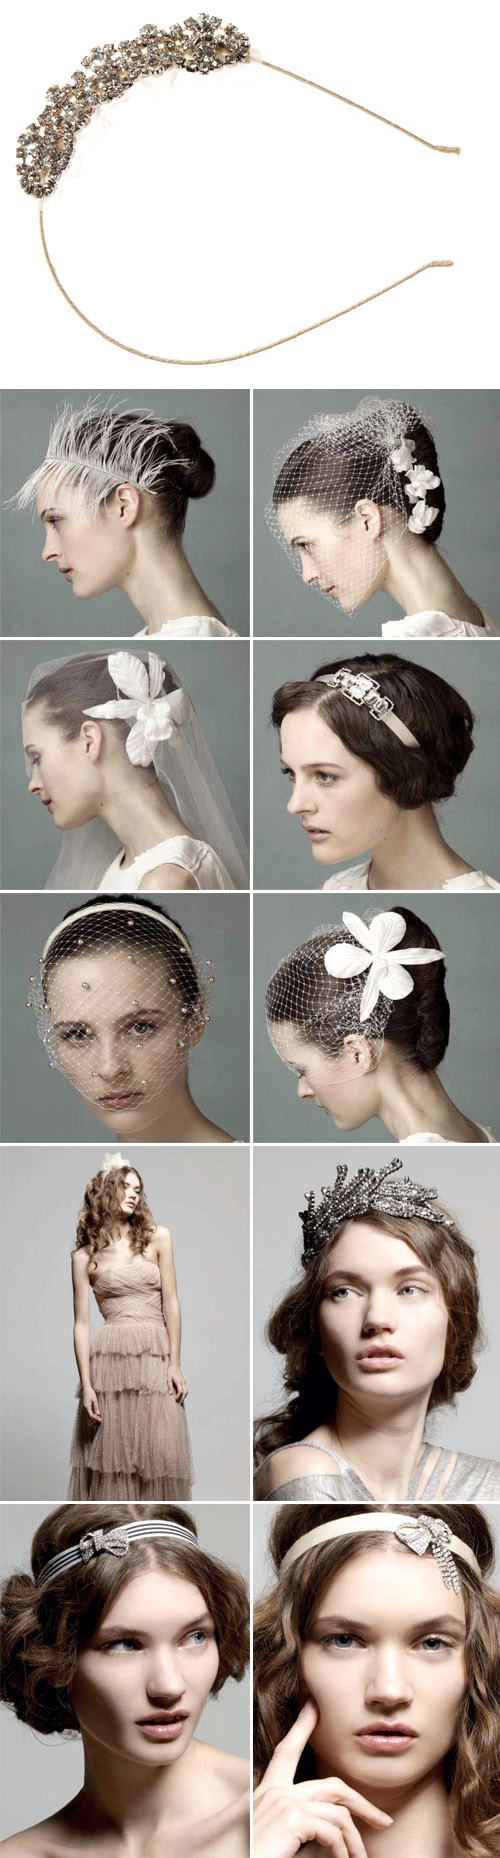 bridal hair veils, headbands and accessories by Jennifer Behr, www.jenniferbehr.com